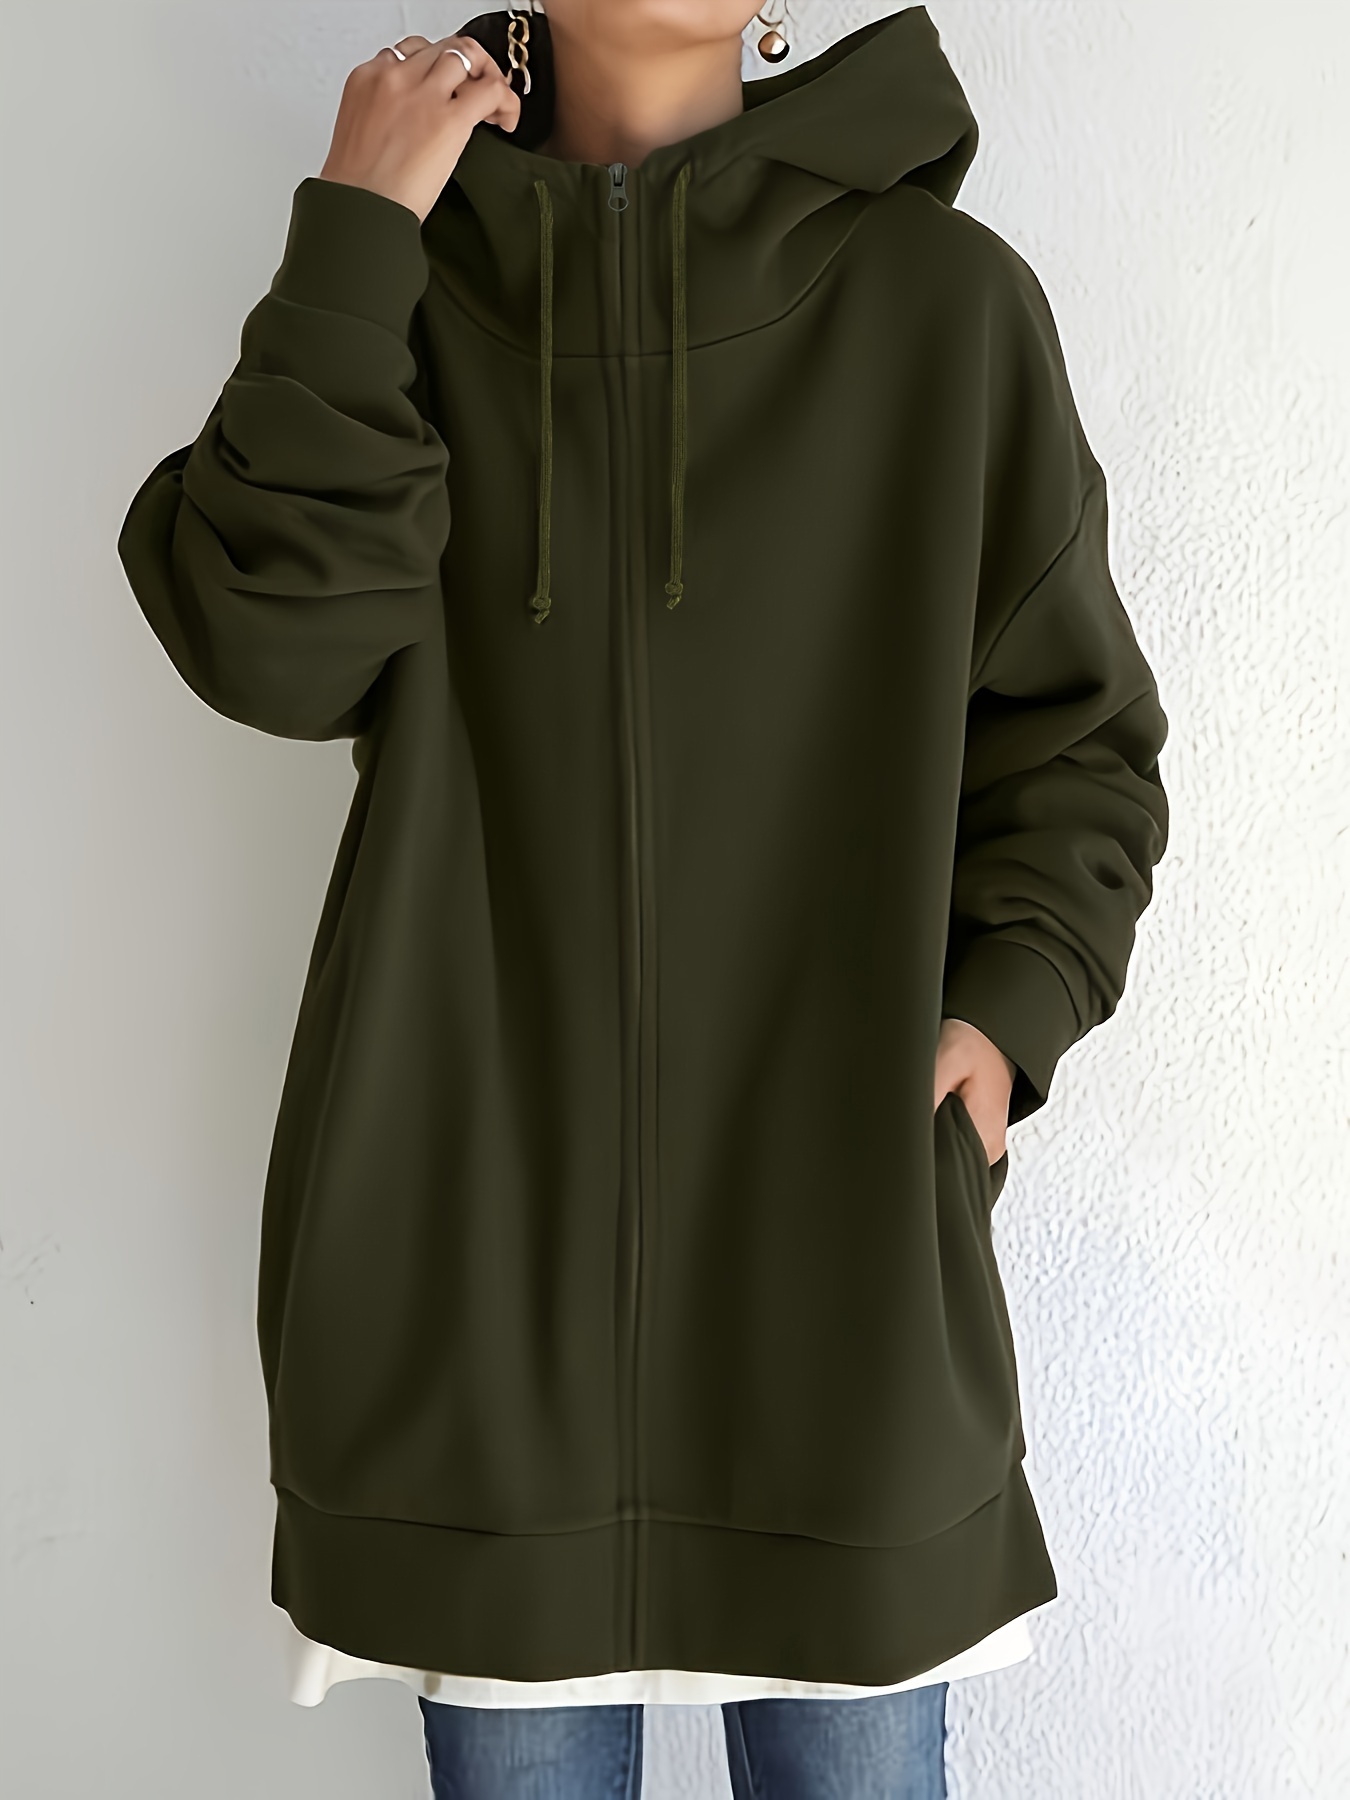 Ladies Fleece PLAIN ZIP HOODIE Plus Size Zipper Sweatshirt Jacket  Small-XXXXXXXL